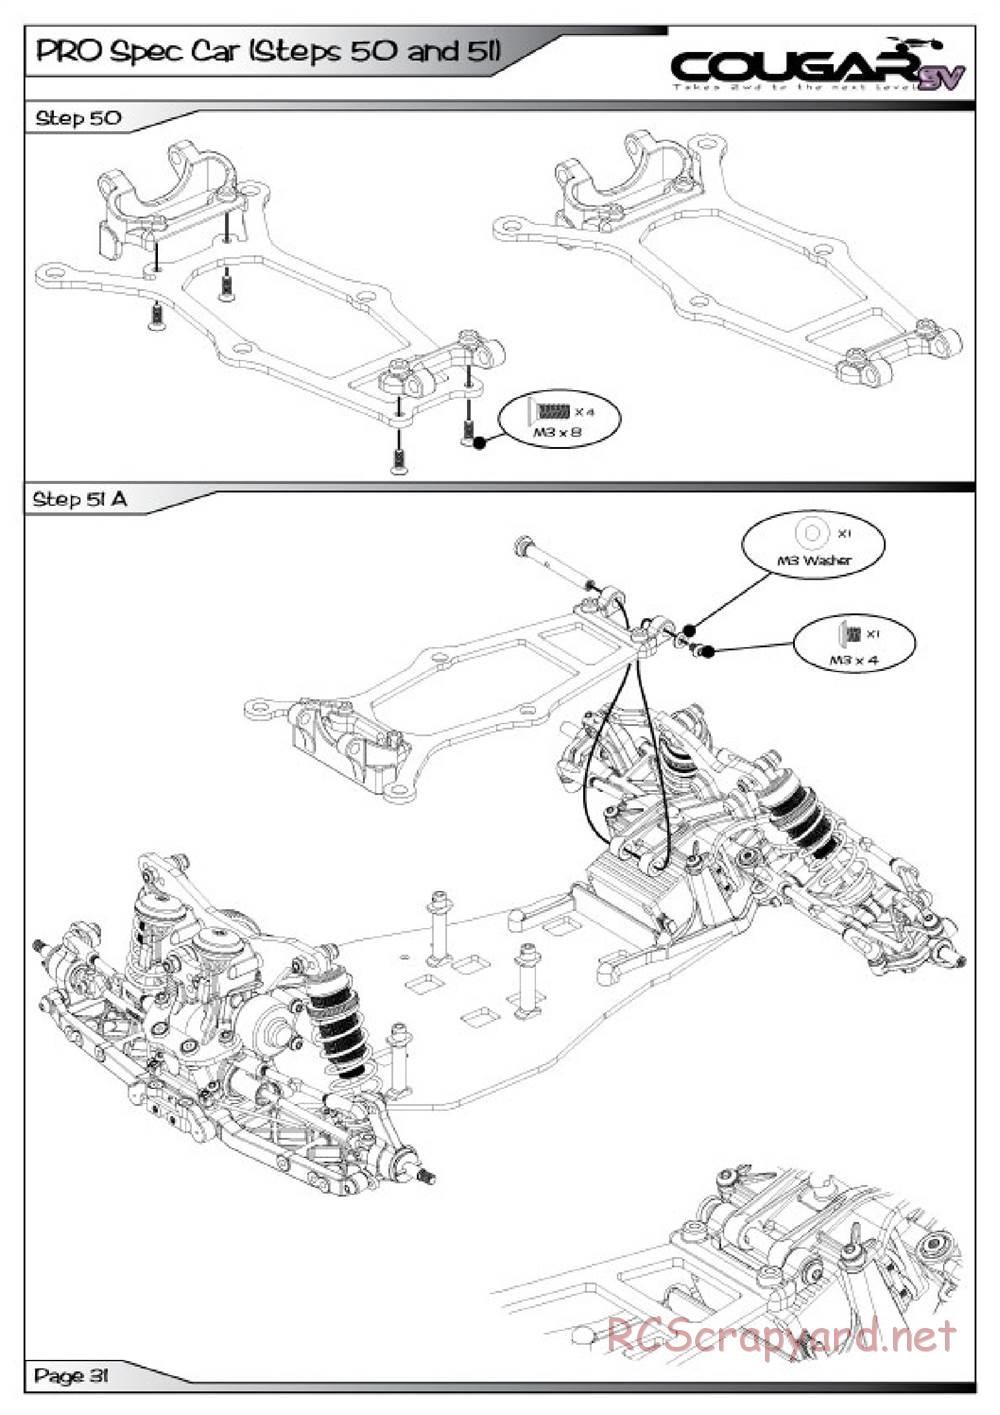 Schumacher - Cougar SV - Manual - Page 32